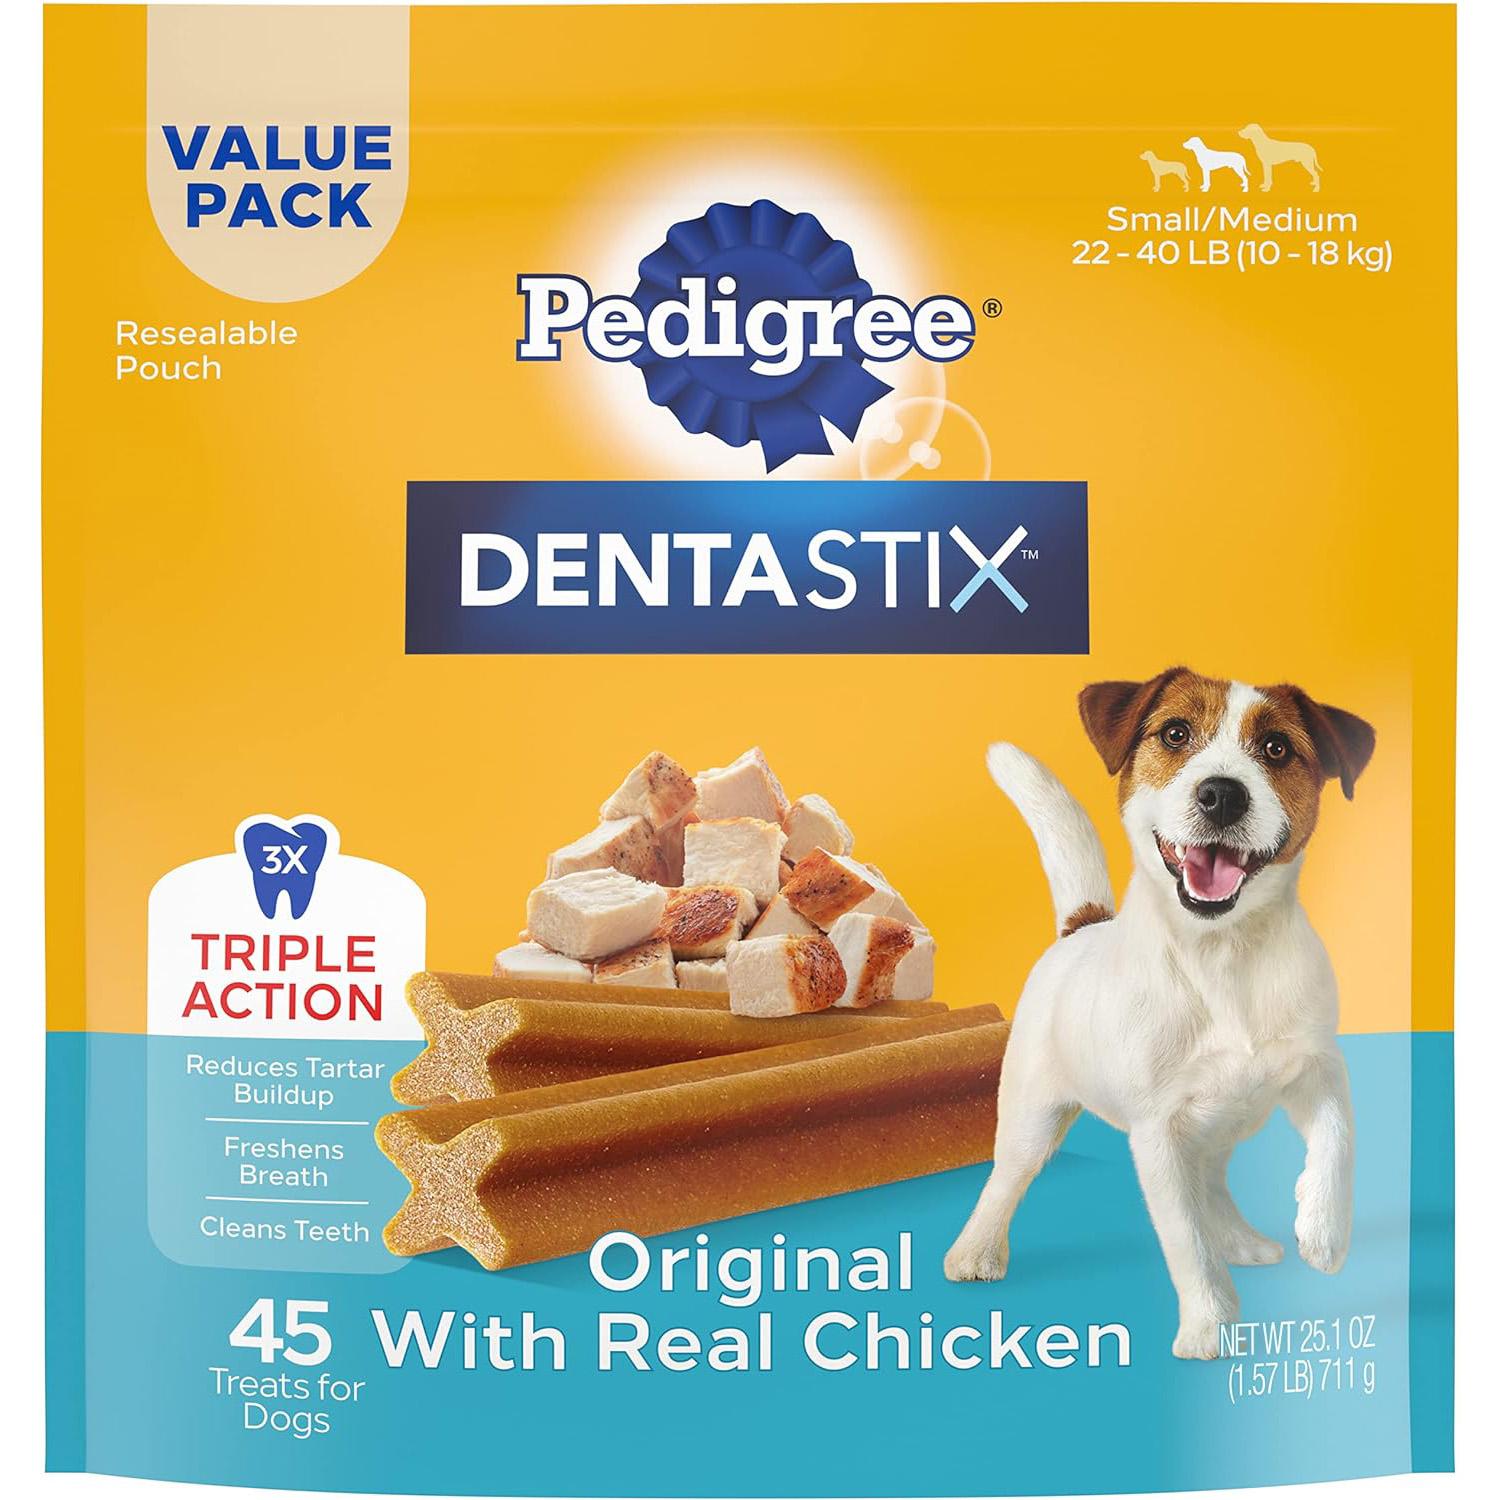 Pedigree Dentastix Dog Dental Treats Original Flavor Dental Bones for $8.95 Shipped